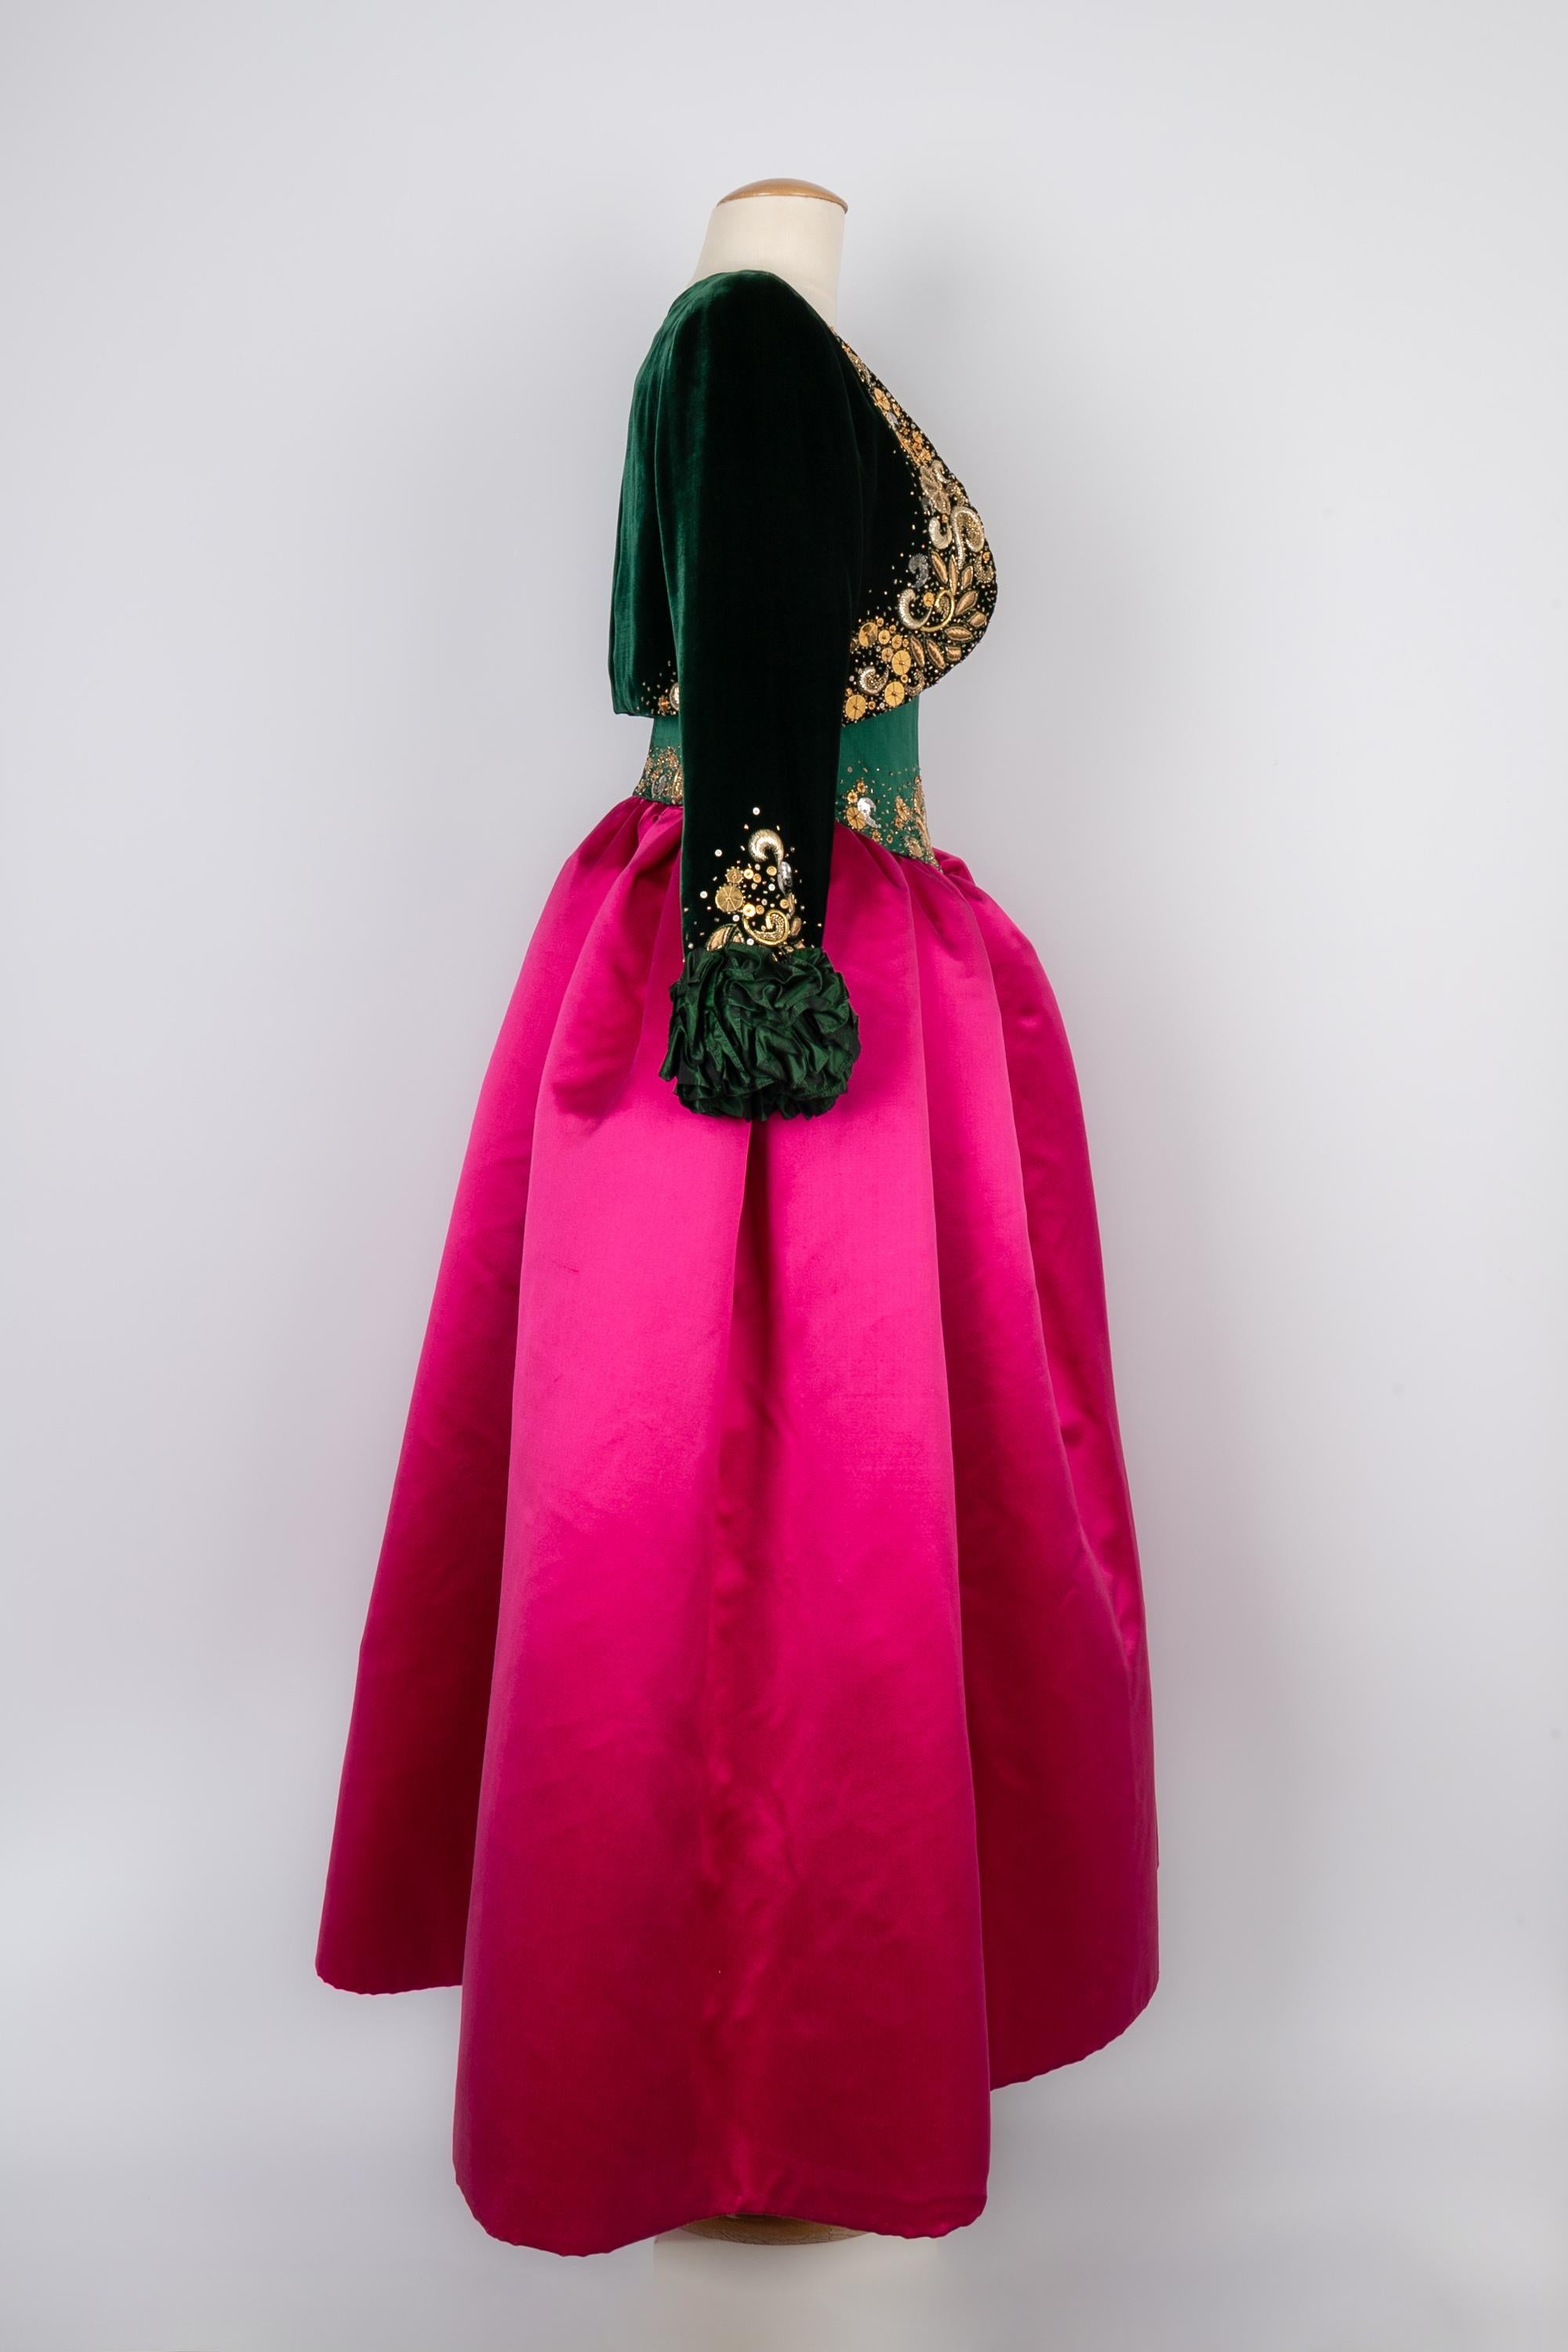 Women's Nina Ricci dress Haute Couture 1991/1992 For Sale